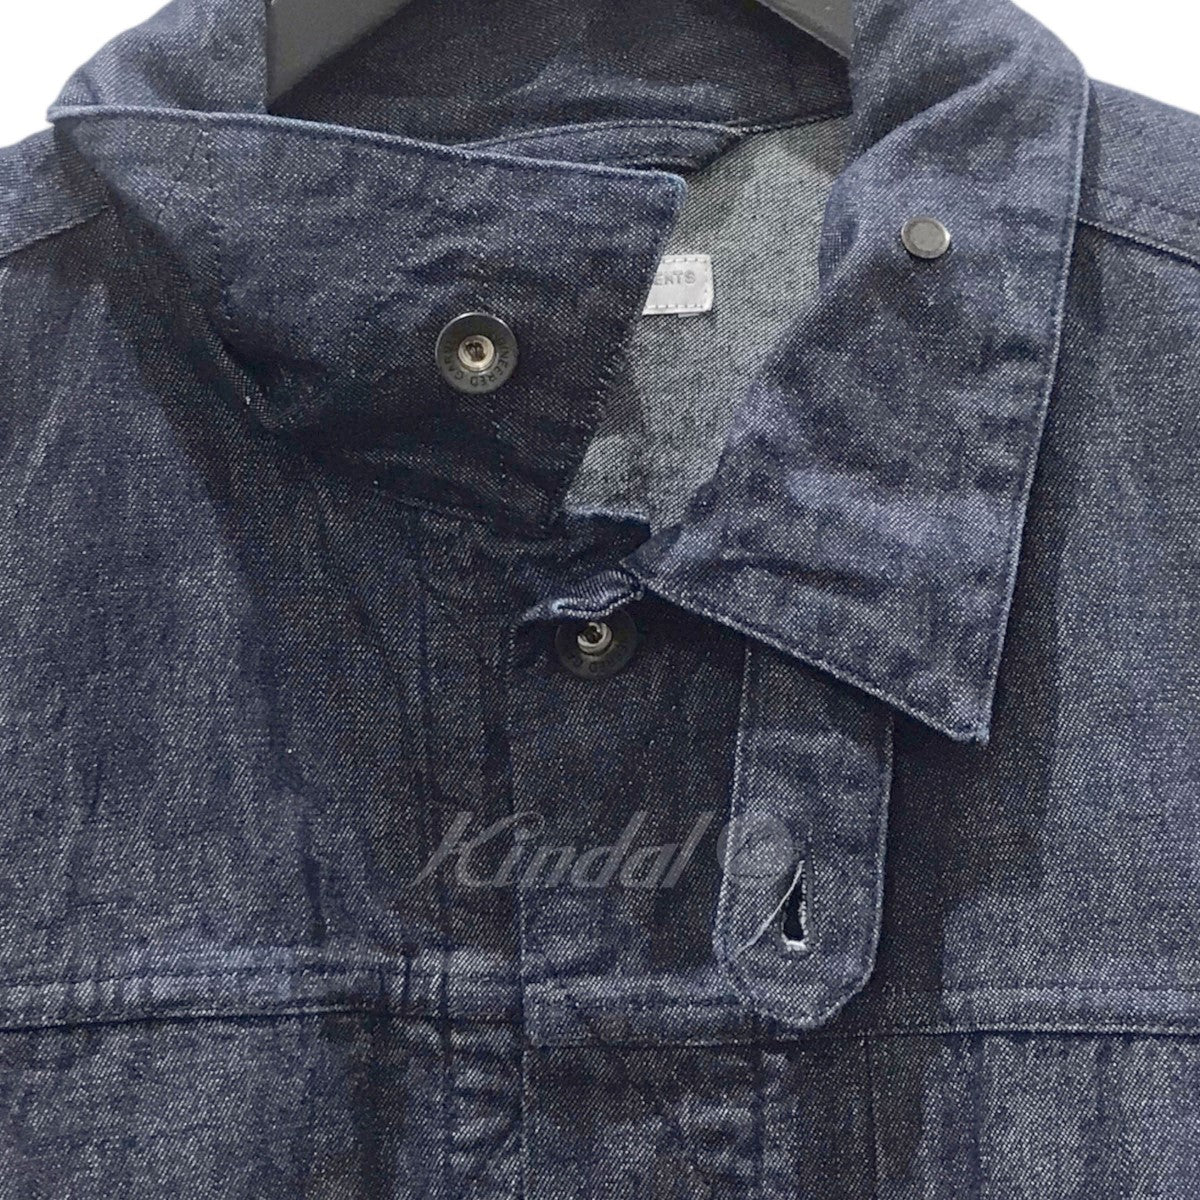 Engineered Garments(エンジニアードガーメンツ) デニムジャケット Trucker jacket トラッカージャケット